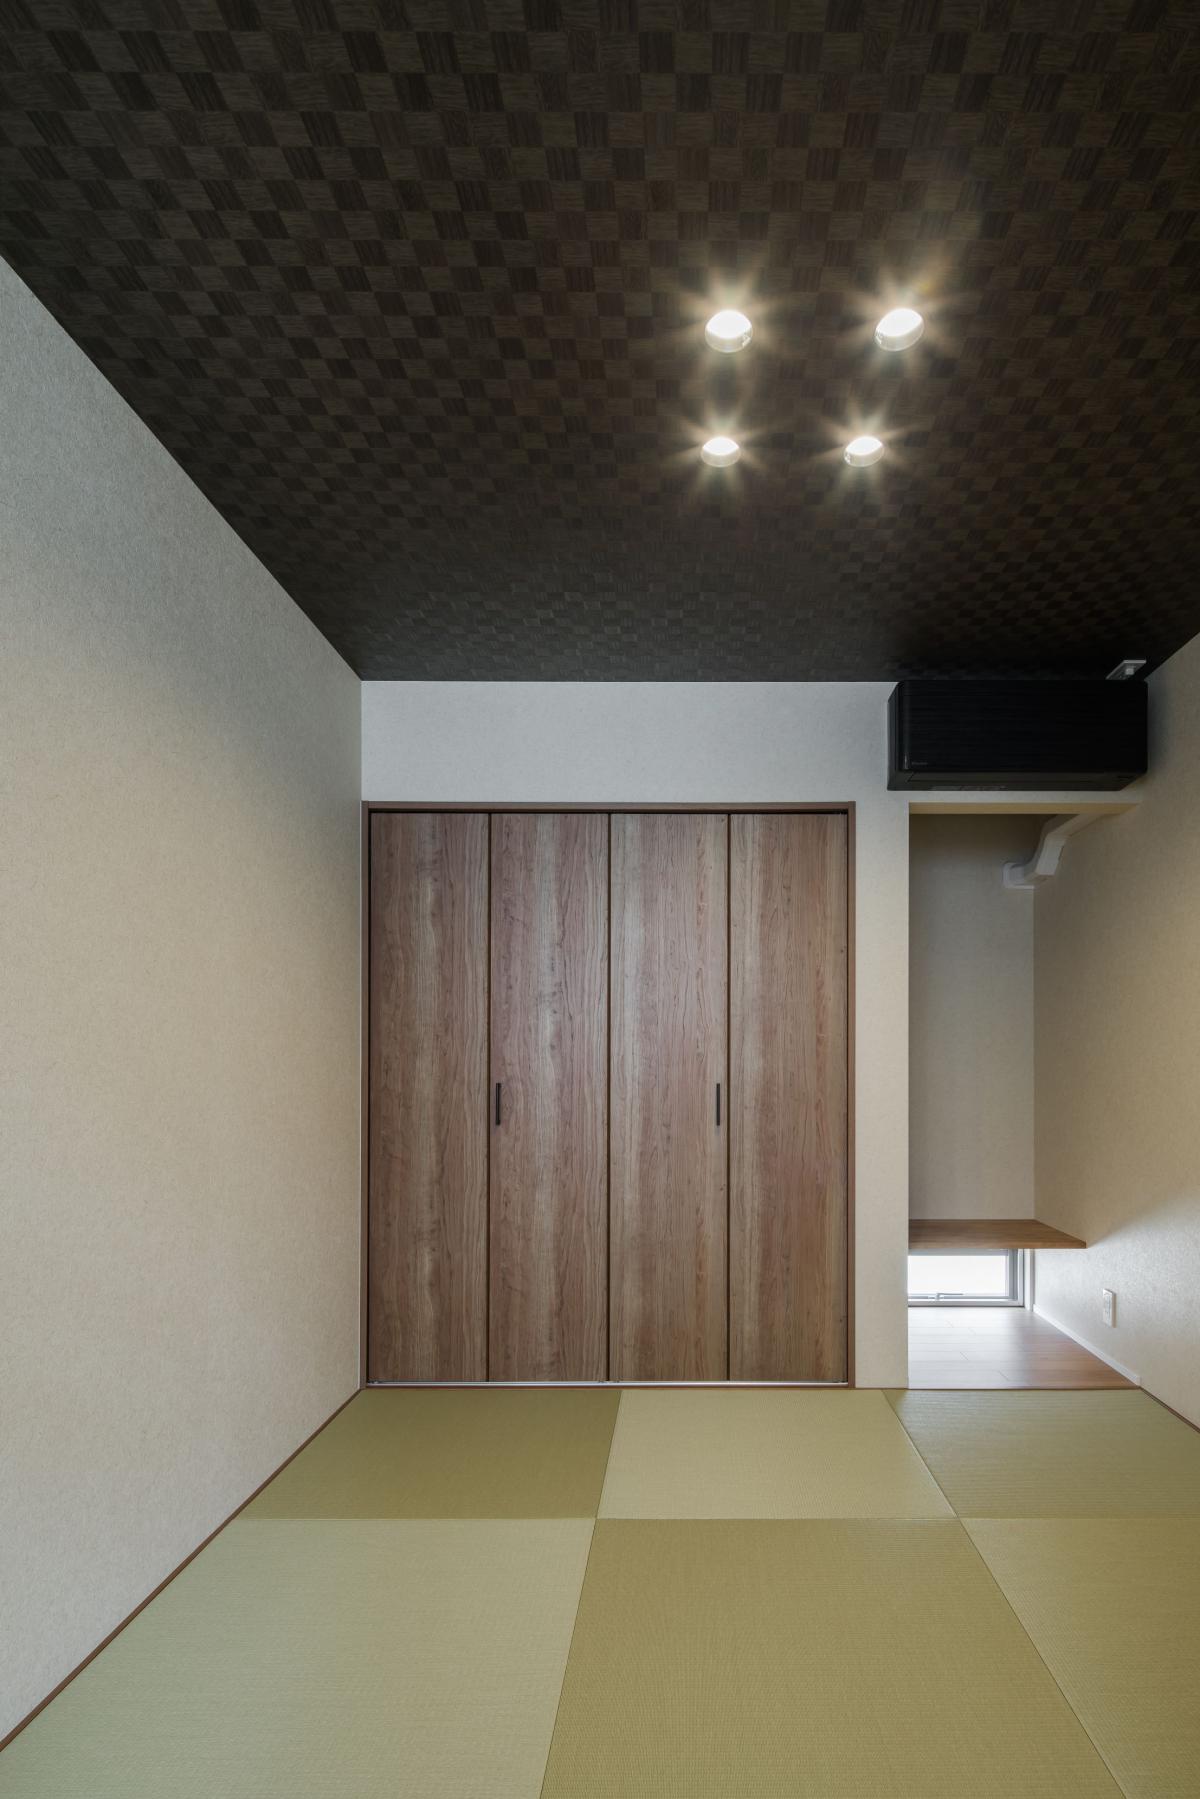 ”Japanese room